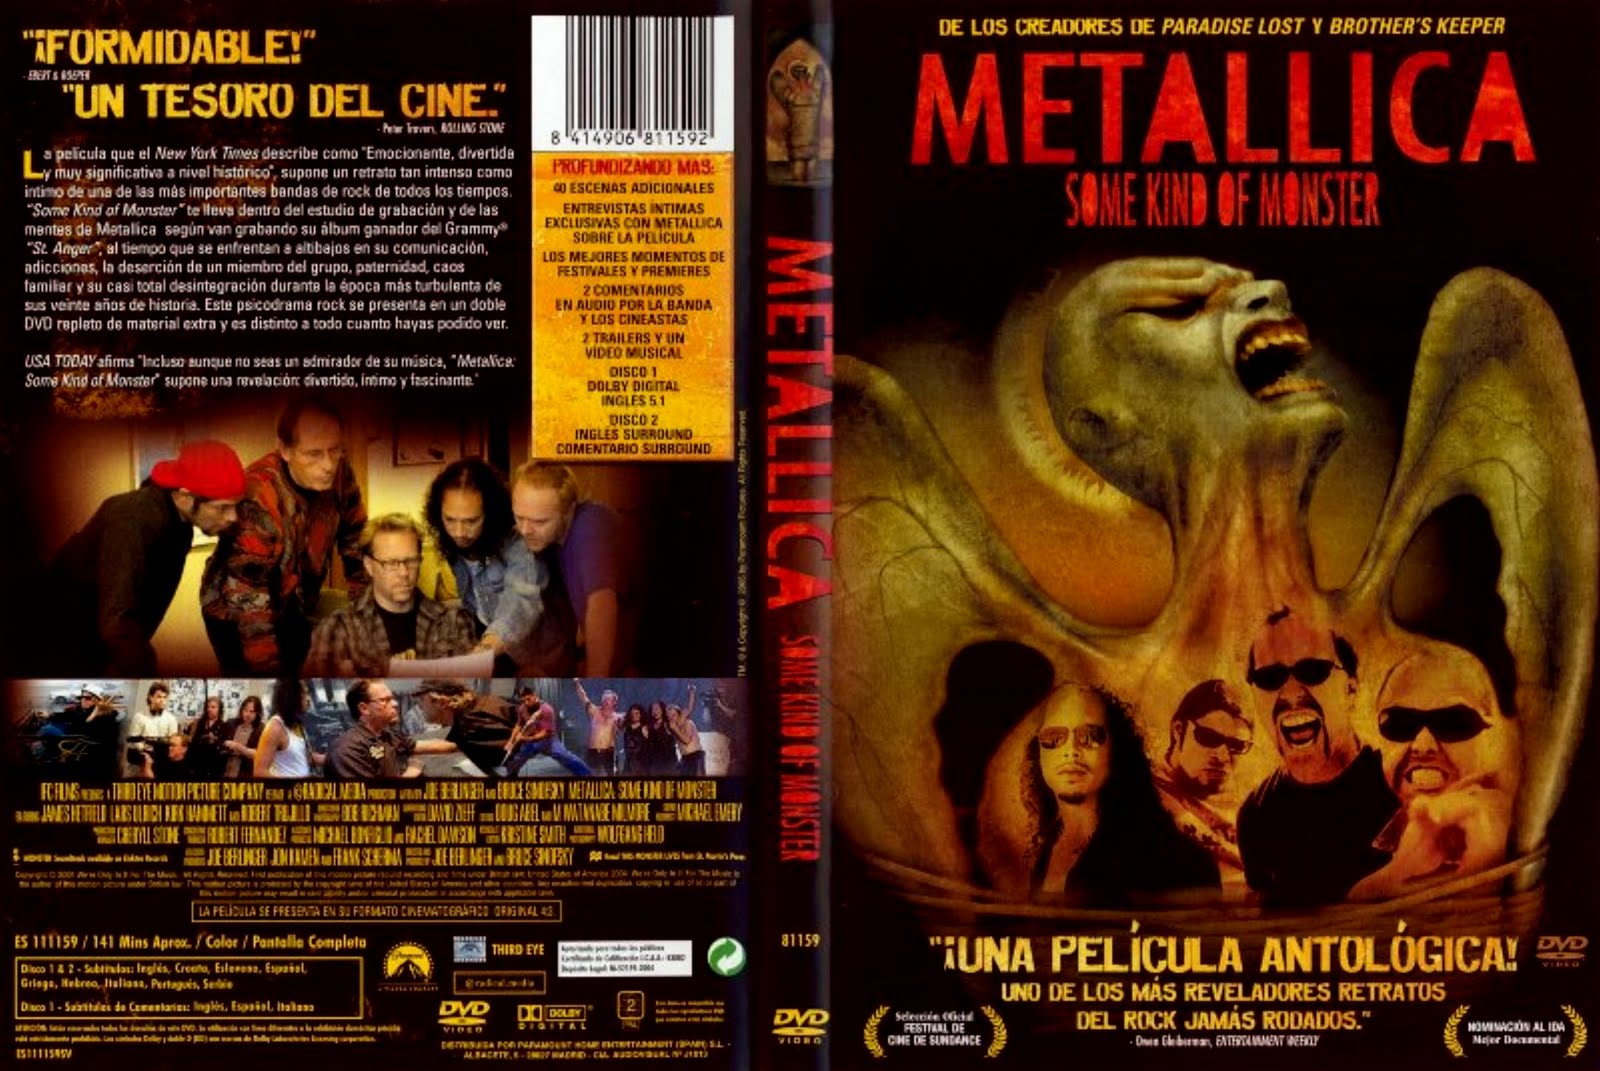 Sound legend some kind of kiss. Metallica some kind of Monster 2004. Metallica монстр. Metallica DVD.